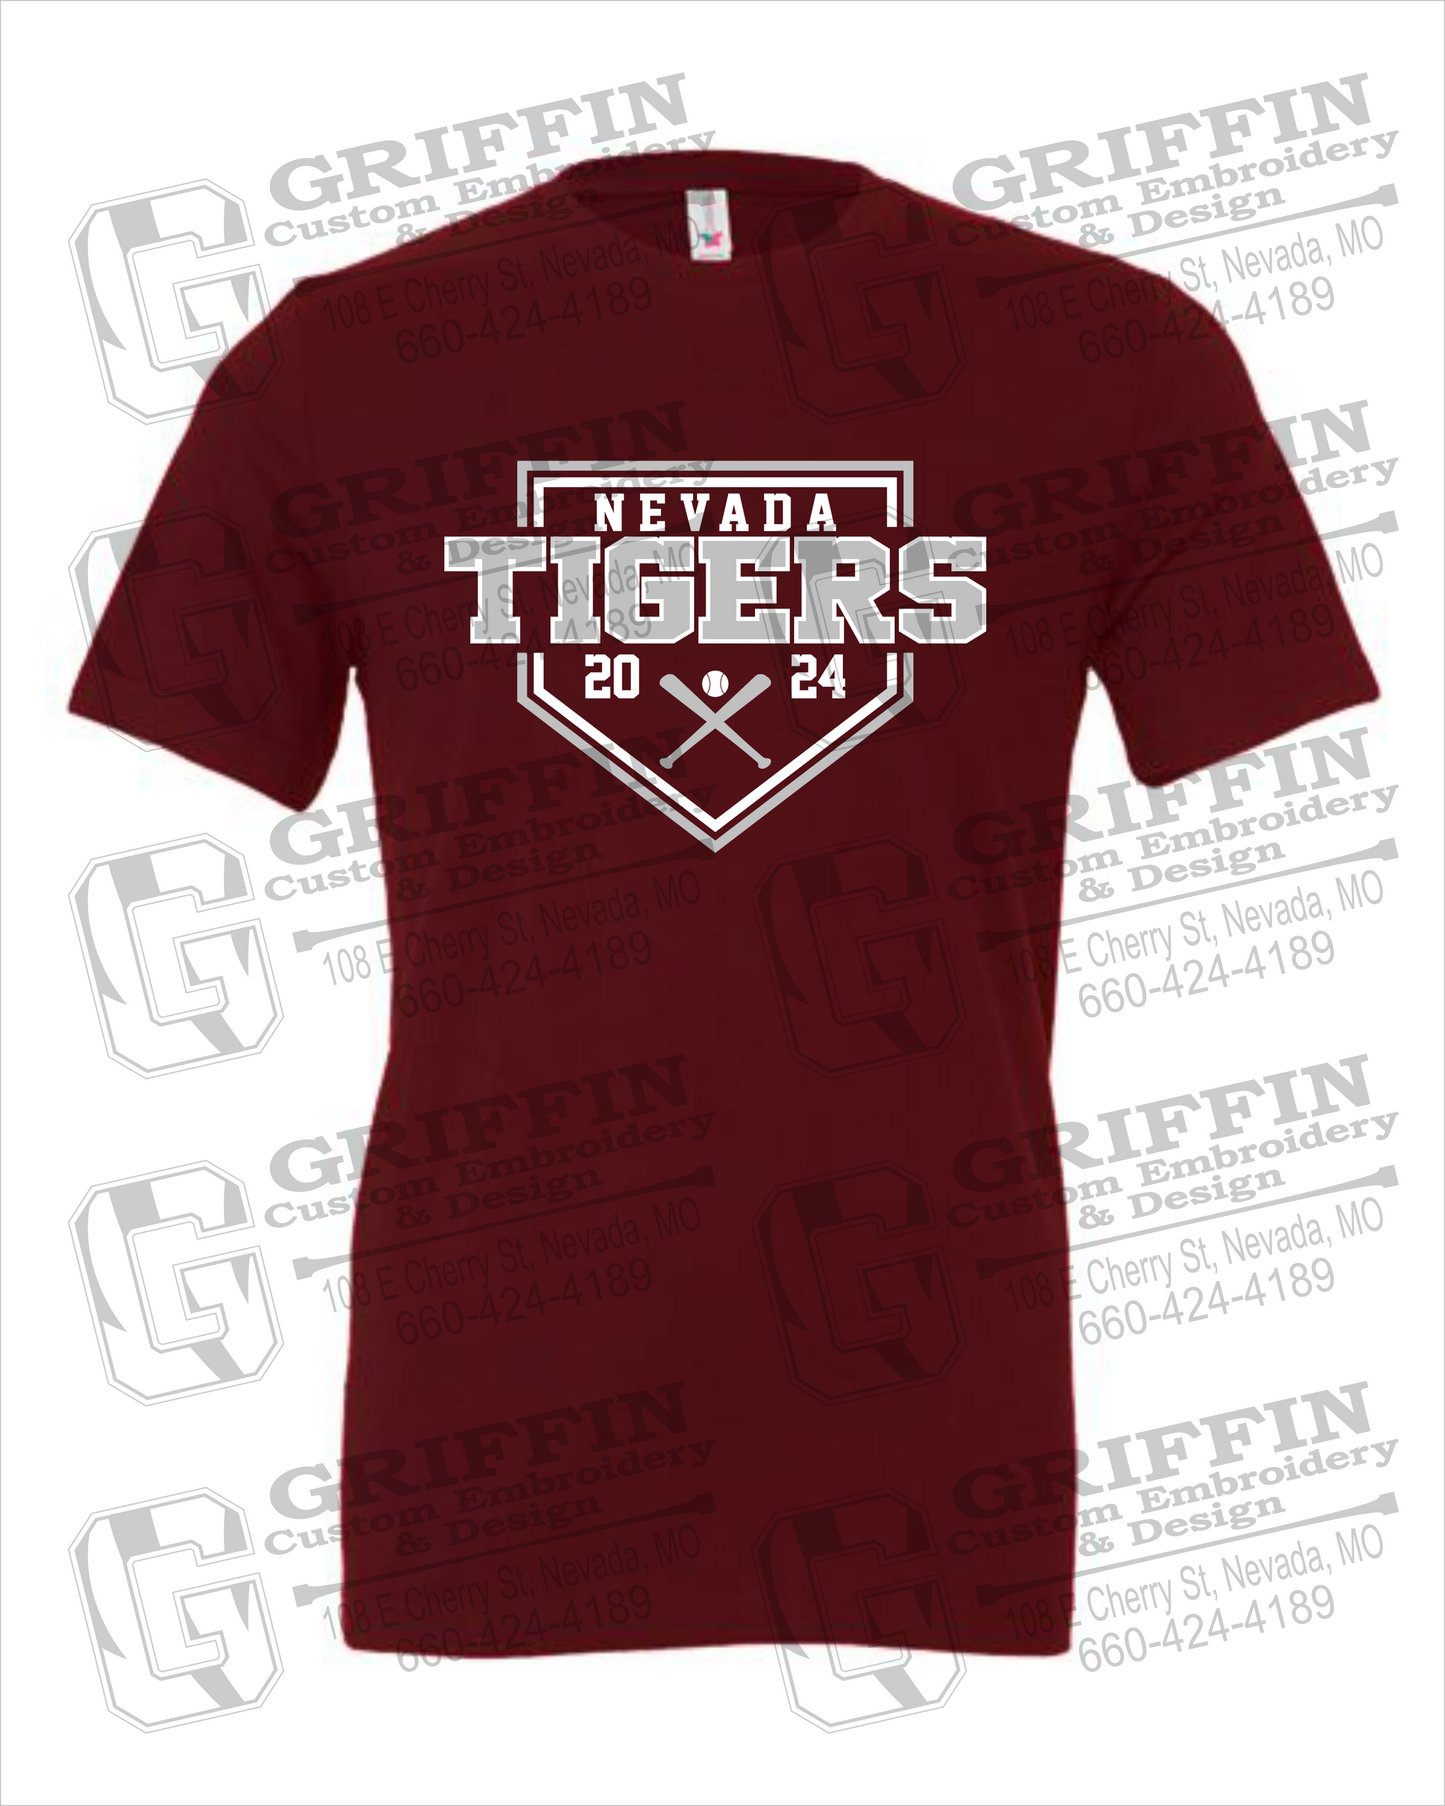 Nevada Tigers 25-A 100% Cotton Short Sleeve T-Shirt - Baseball